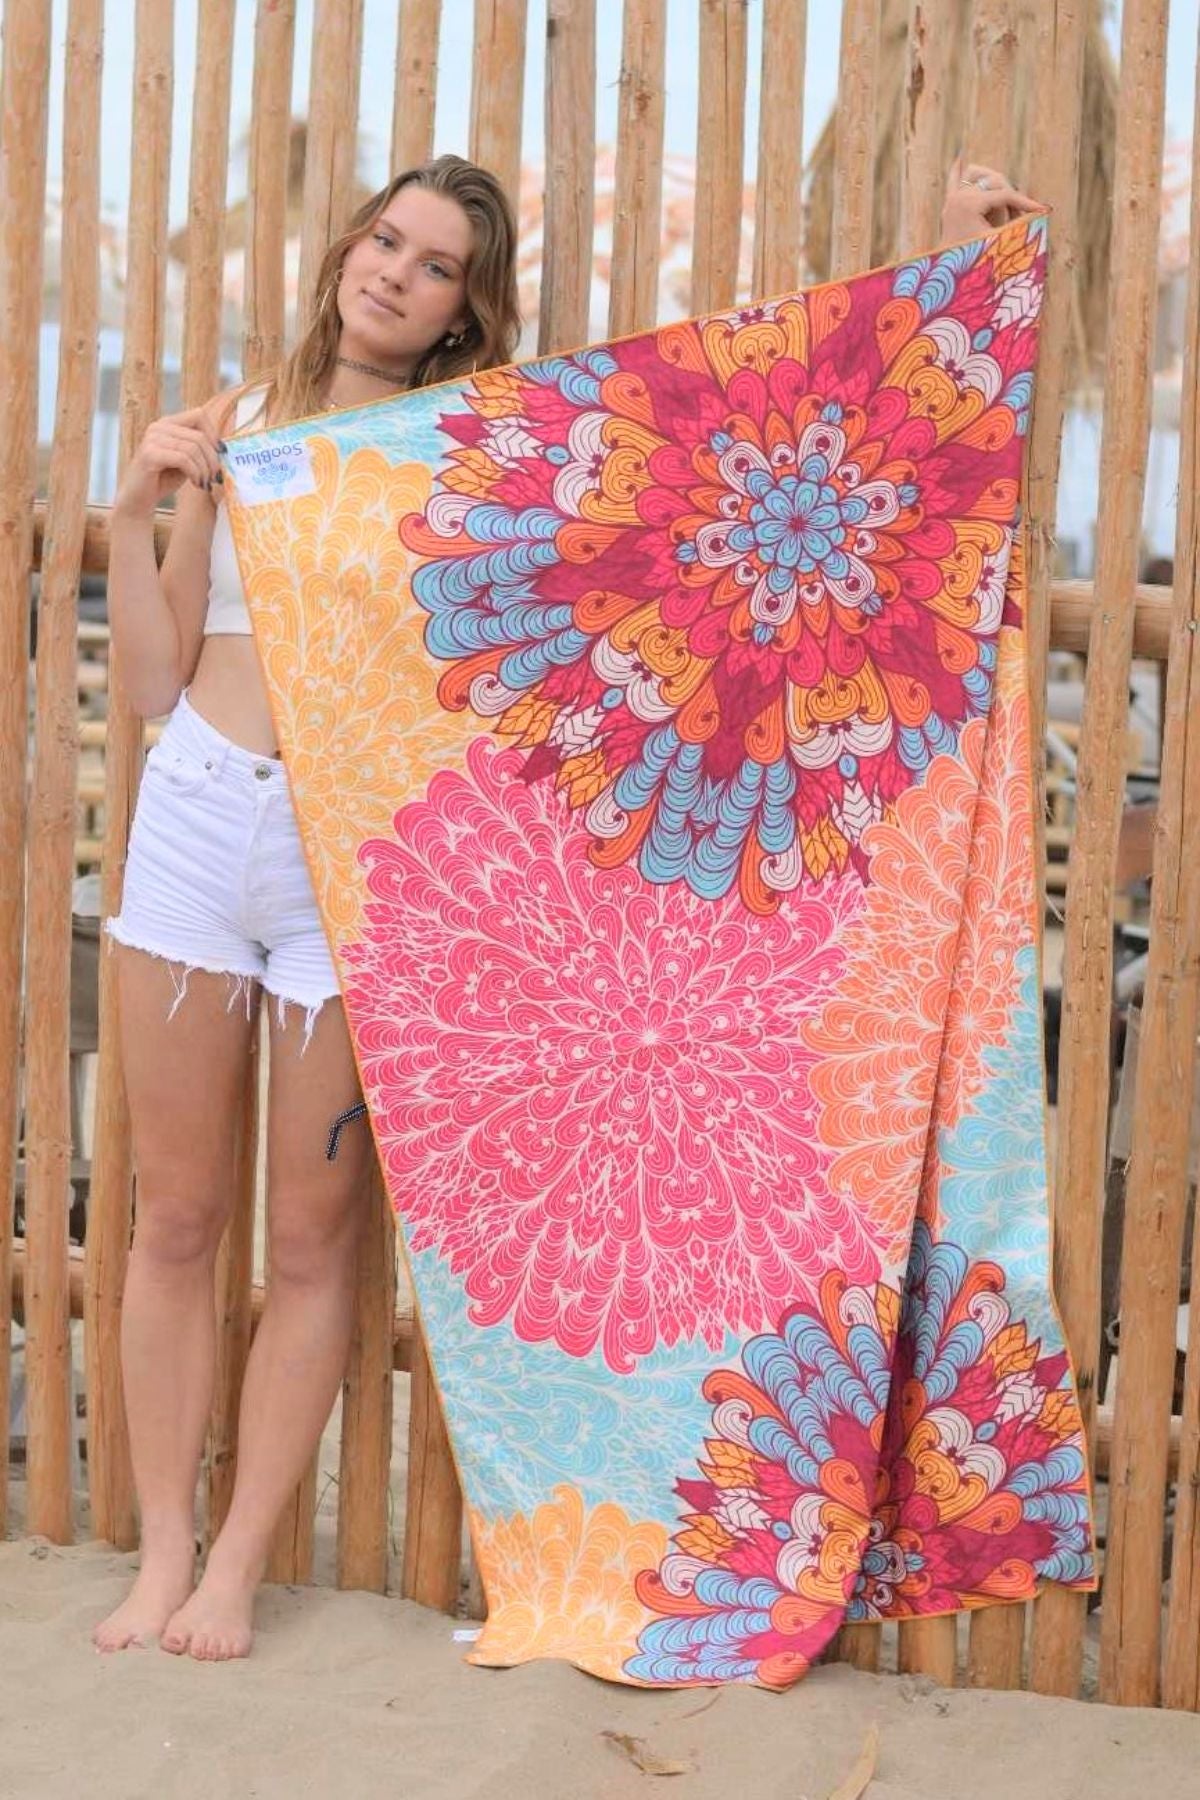 Quick-drying travel towel or beach towel 'MALA' - 100 x 160